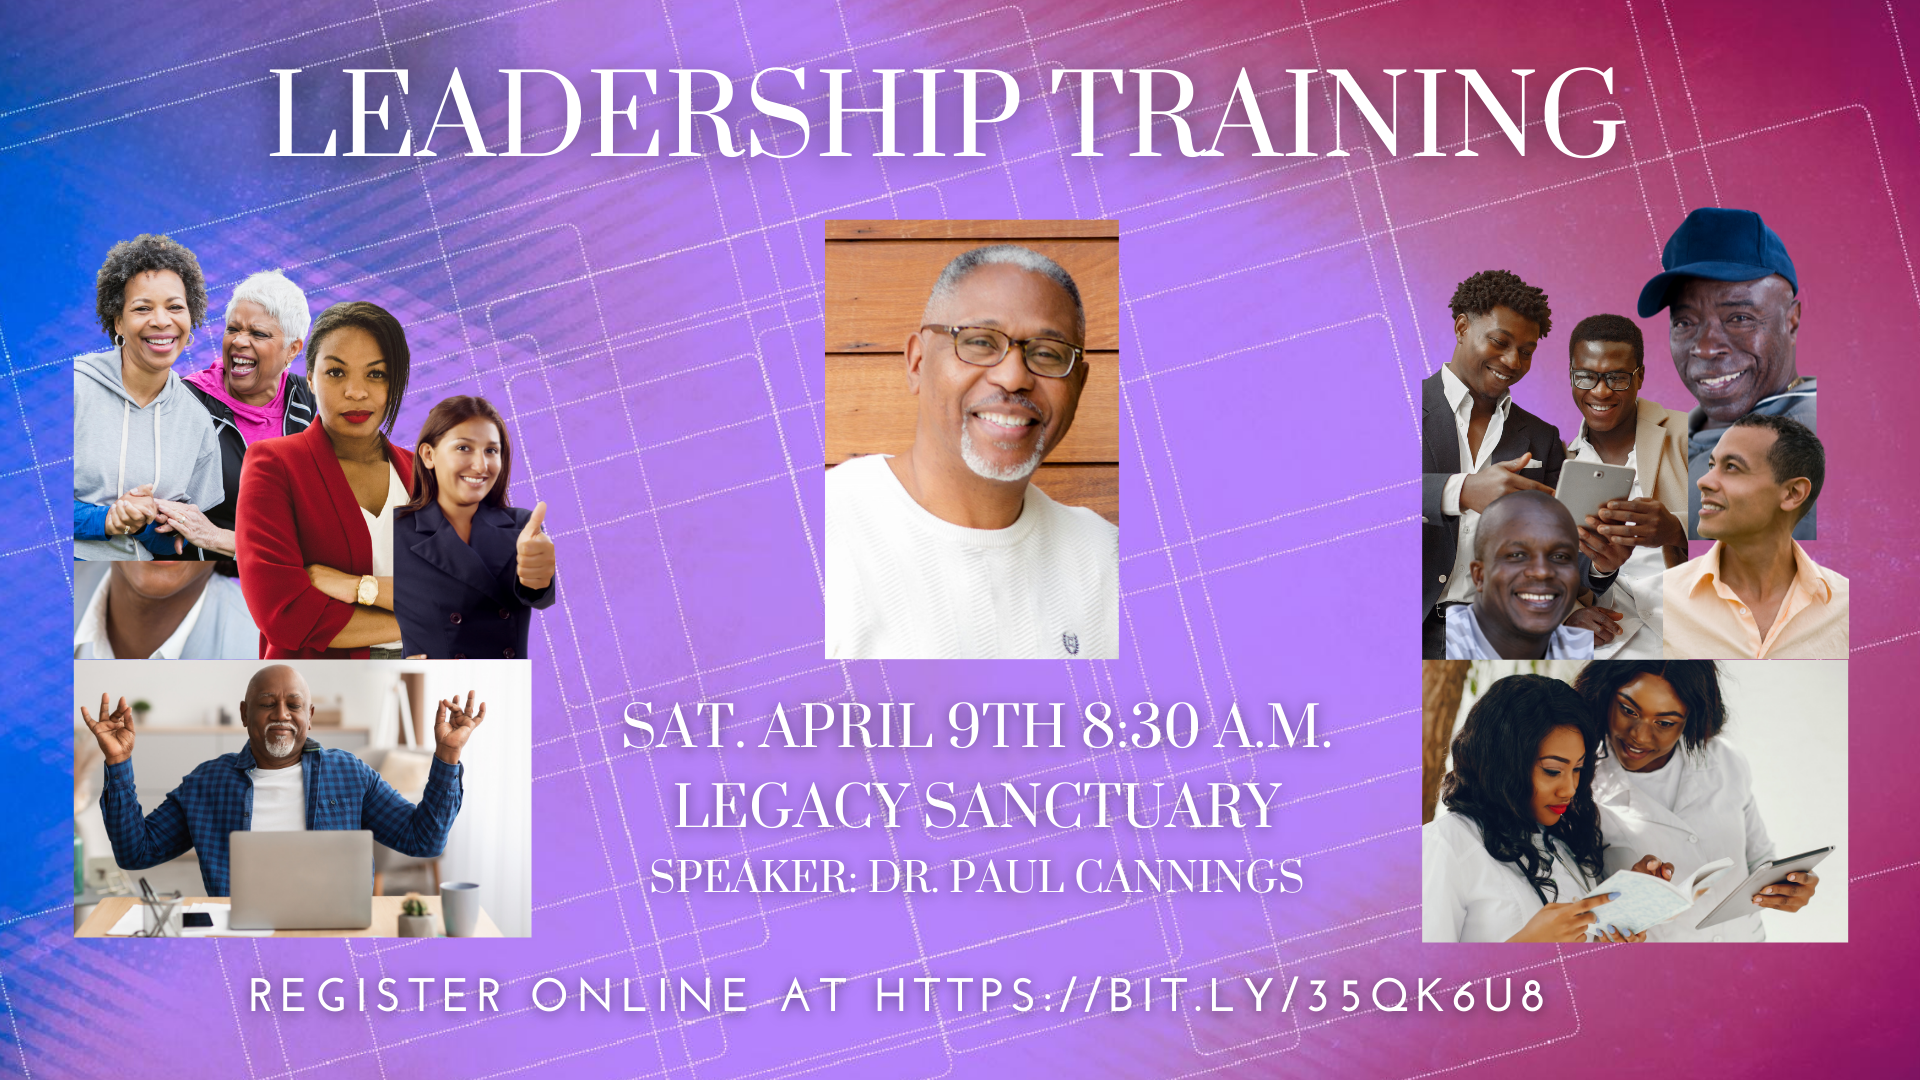 Leadership Training – April 9th 8:30 a.m. head image